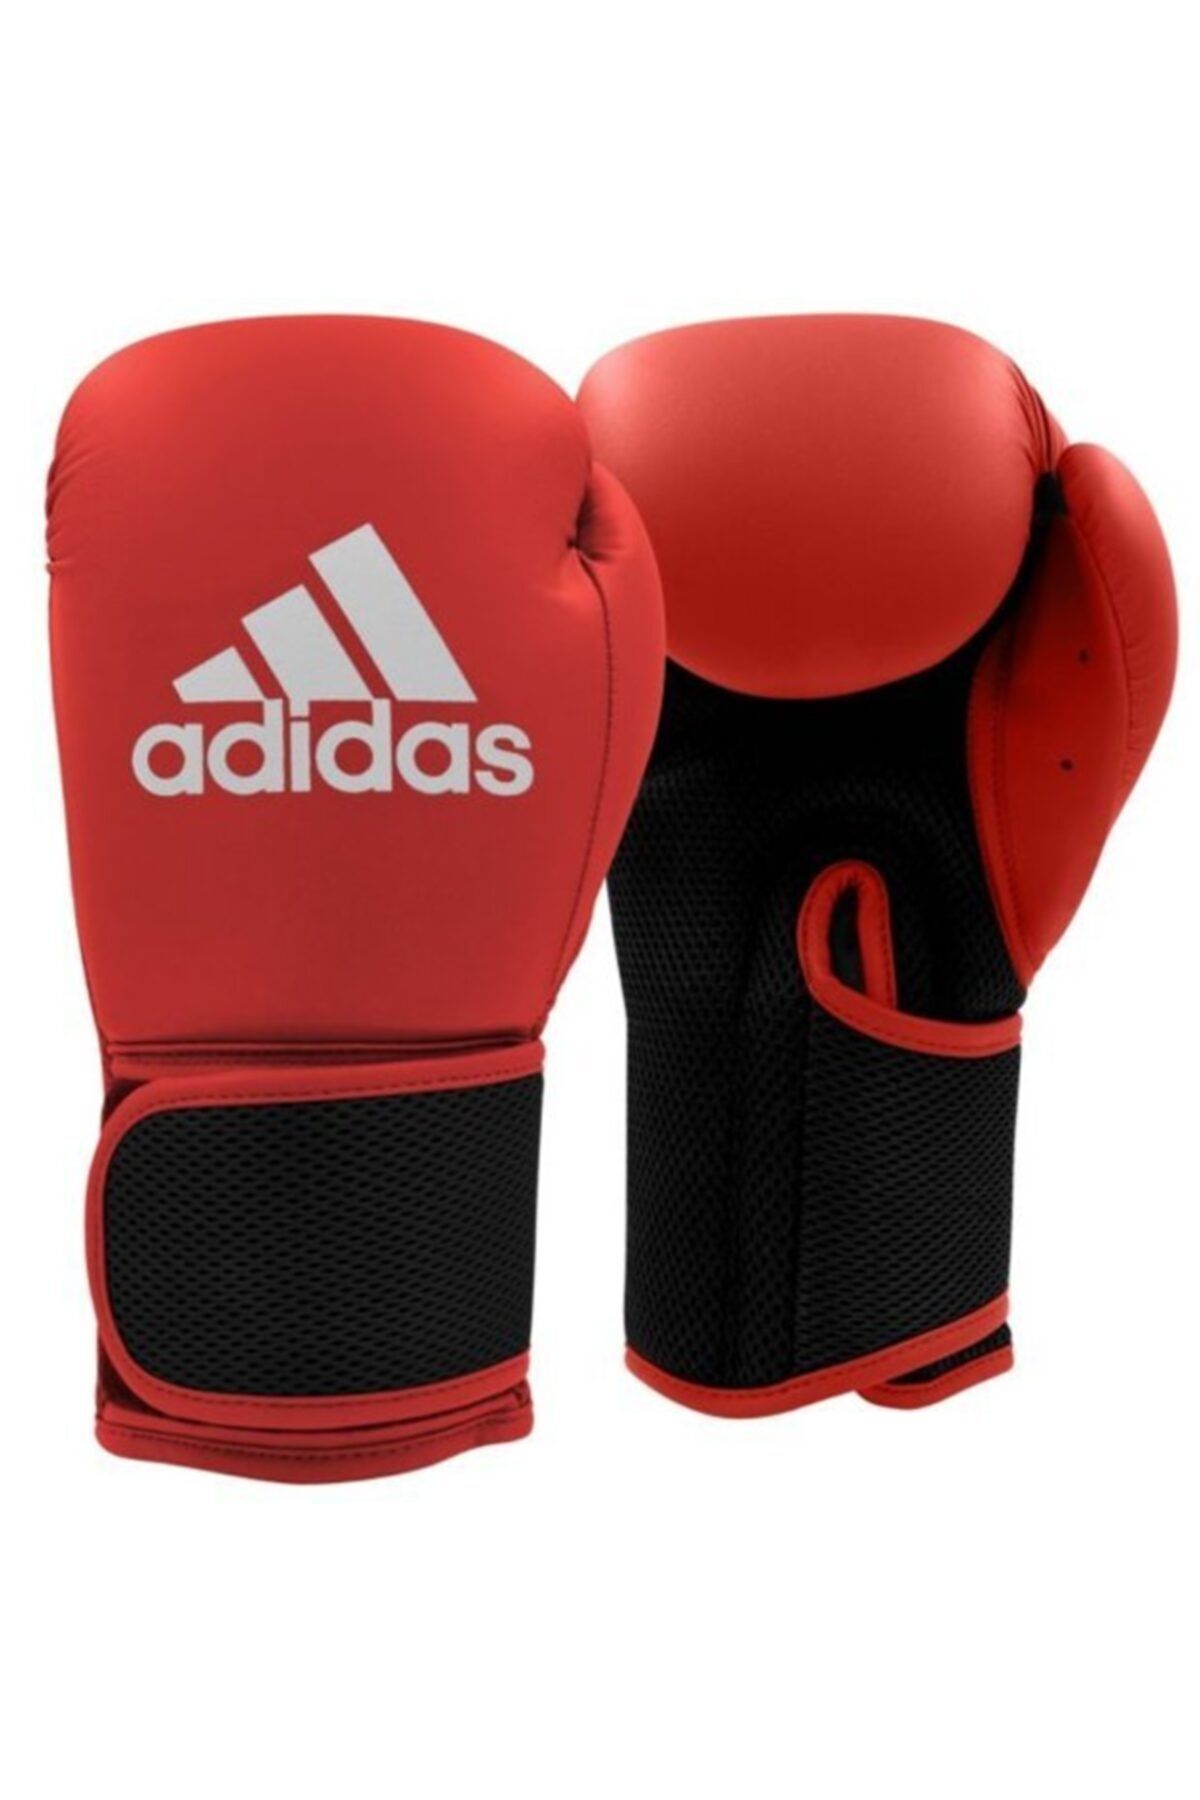 adidas Adıh25 Hybrid 25 Boks Eldiveni Boxing Gloves